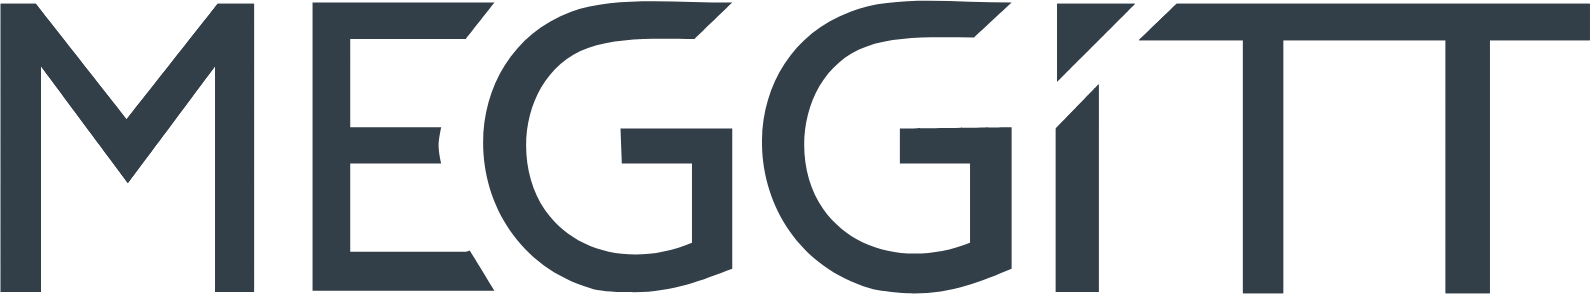 Meggitt logo large (transparent PNG)